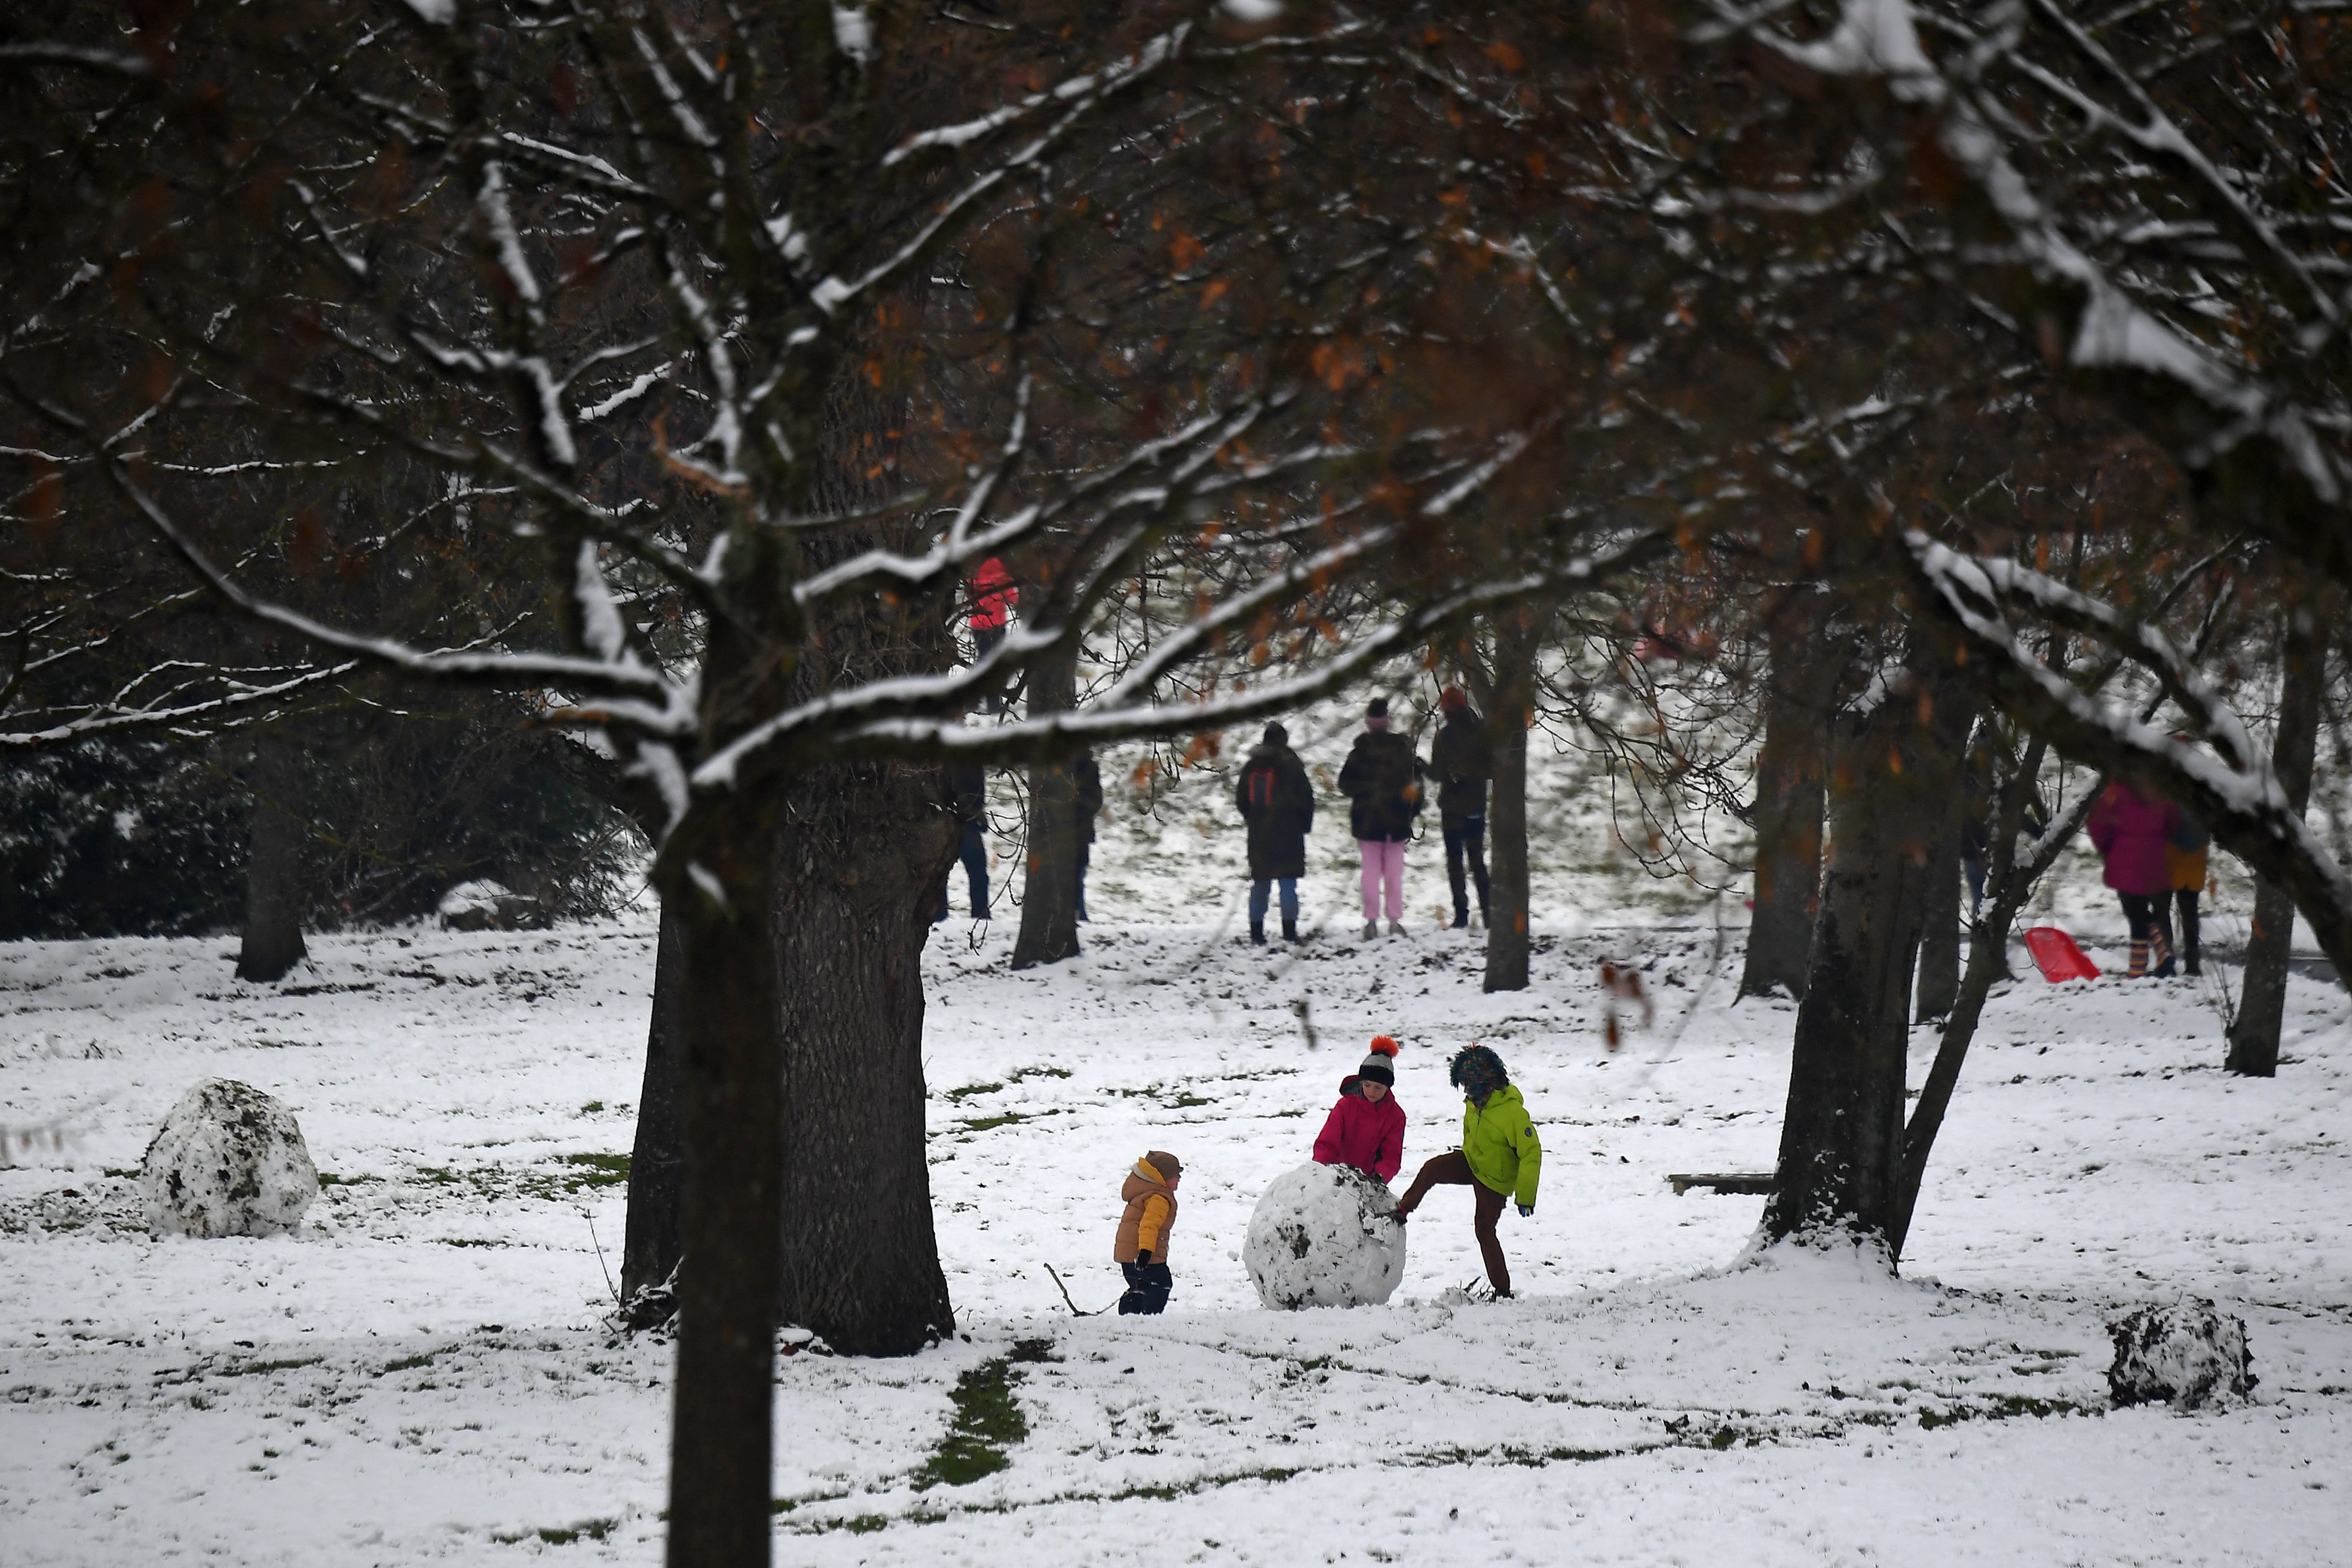 Children play in the snow in Glasgow’s Victoria Park